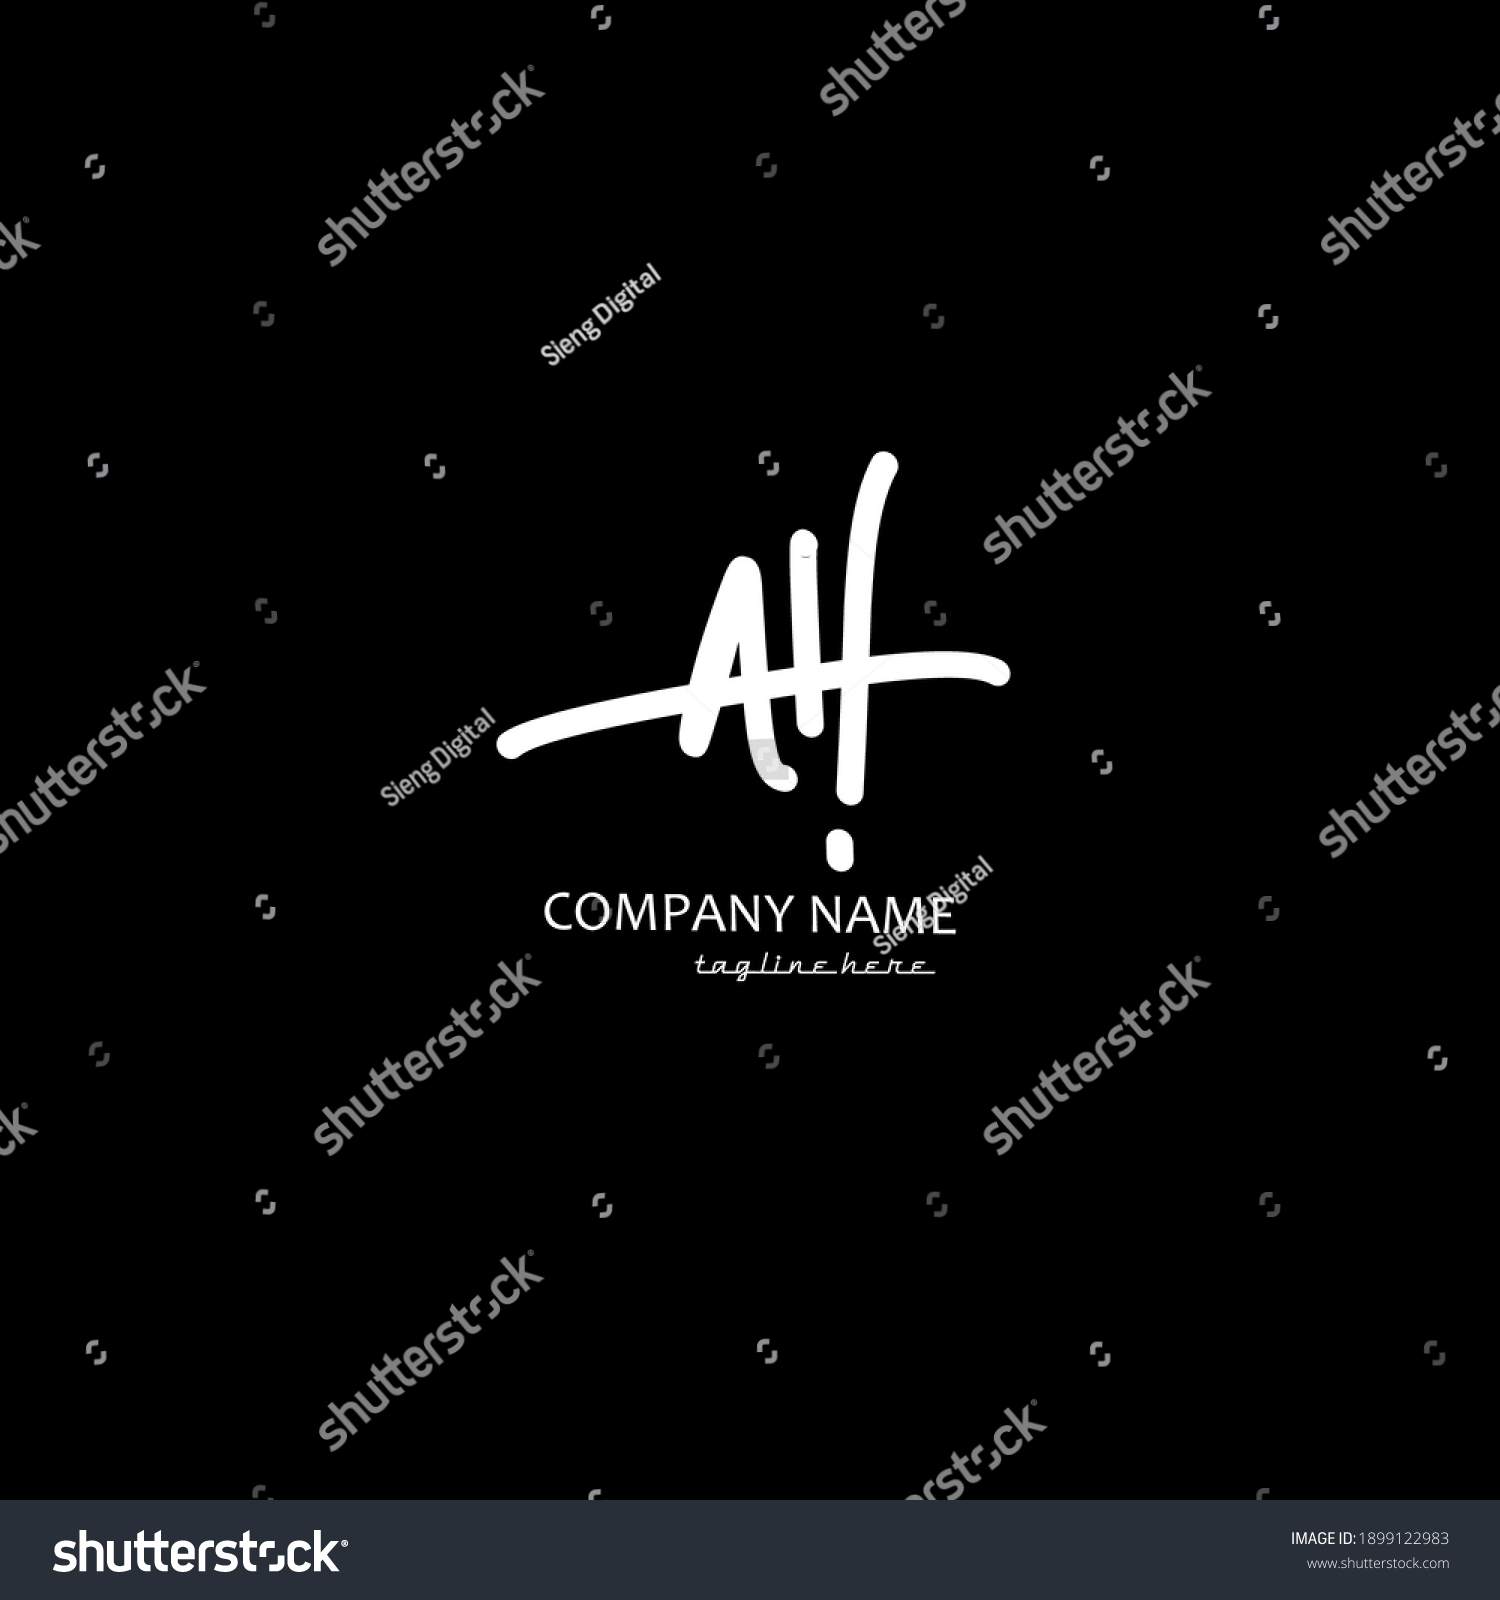 SVG of AH handwritten logo for identity svg